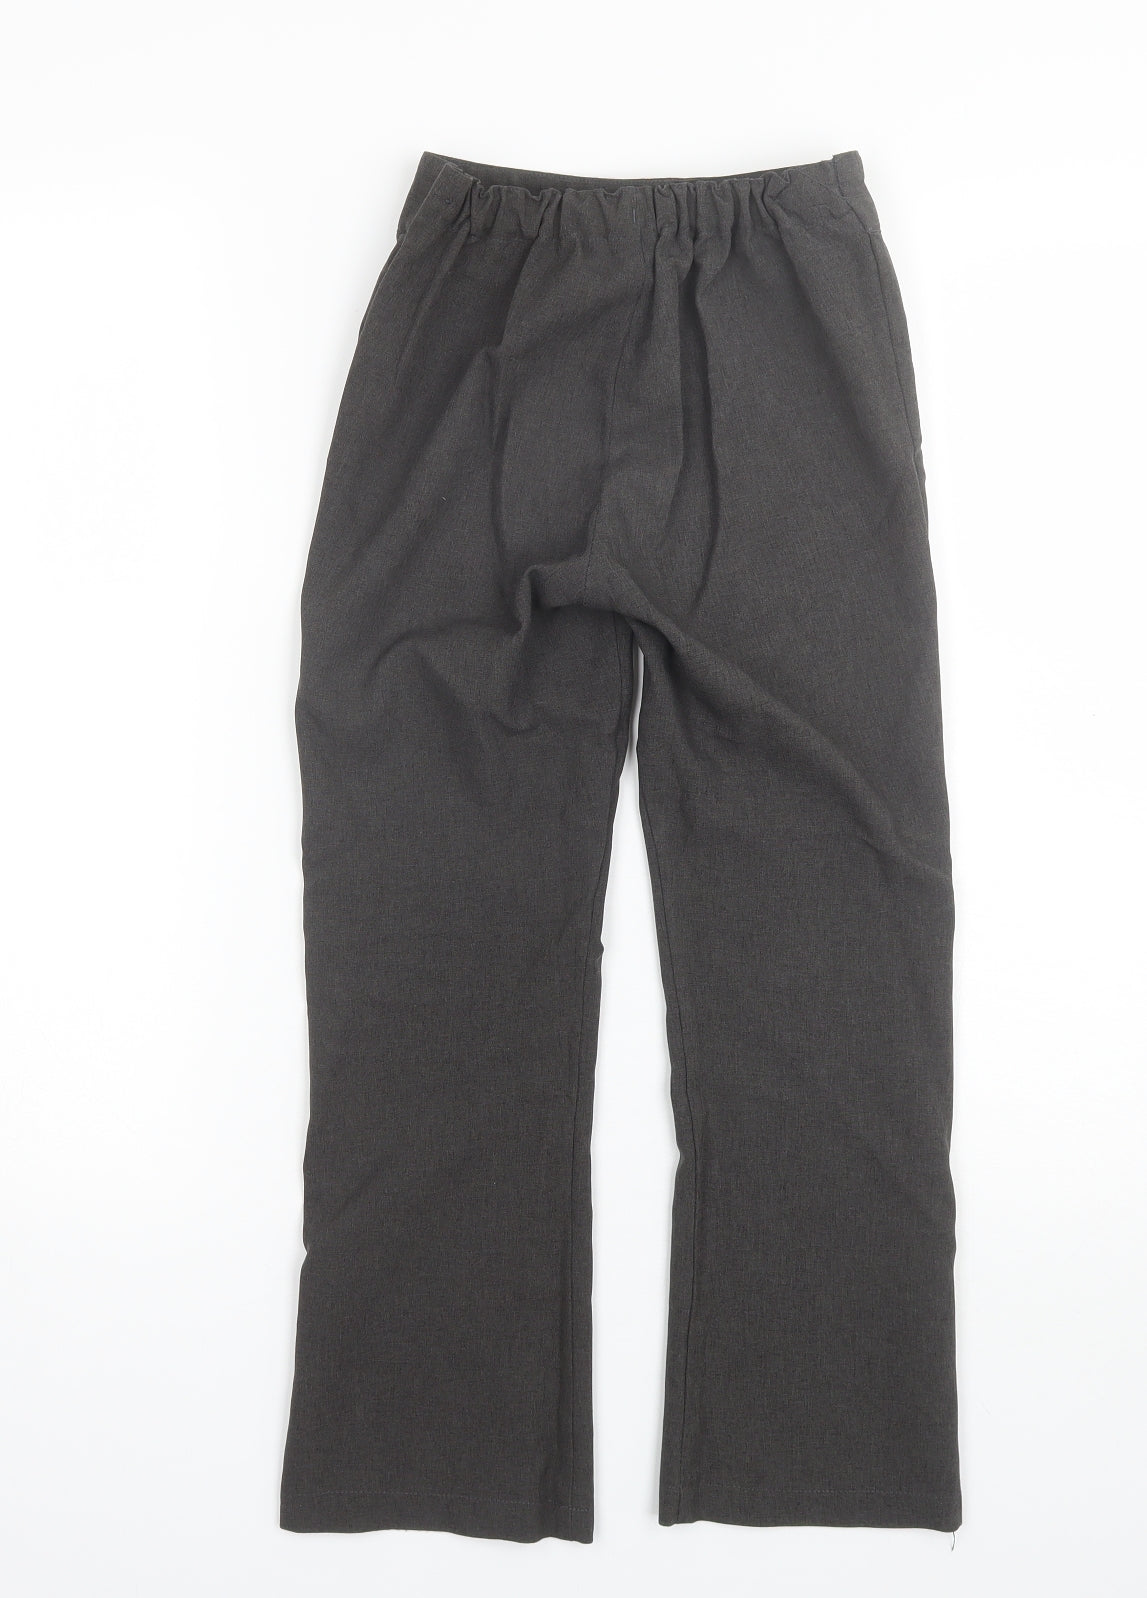 Matalan Boys Grey  Polyester Dress Pants Trousers Size 9 Years  Regular